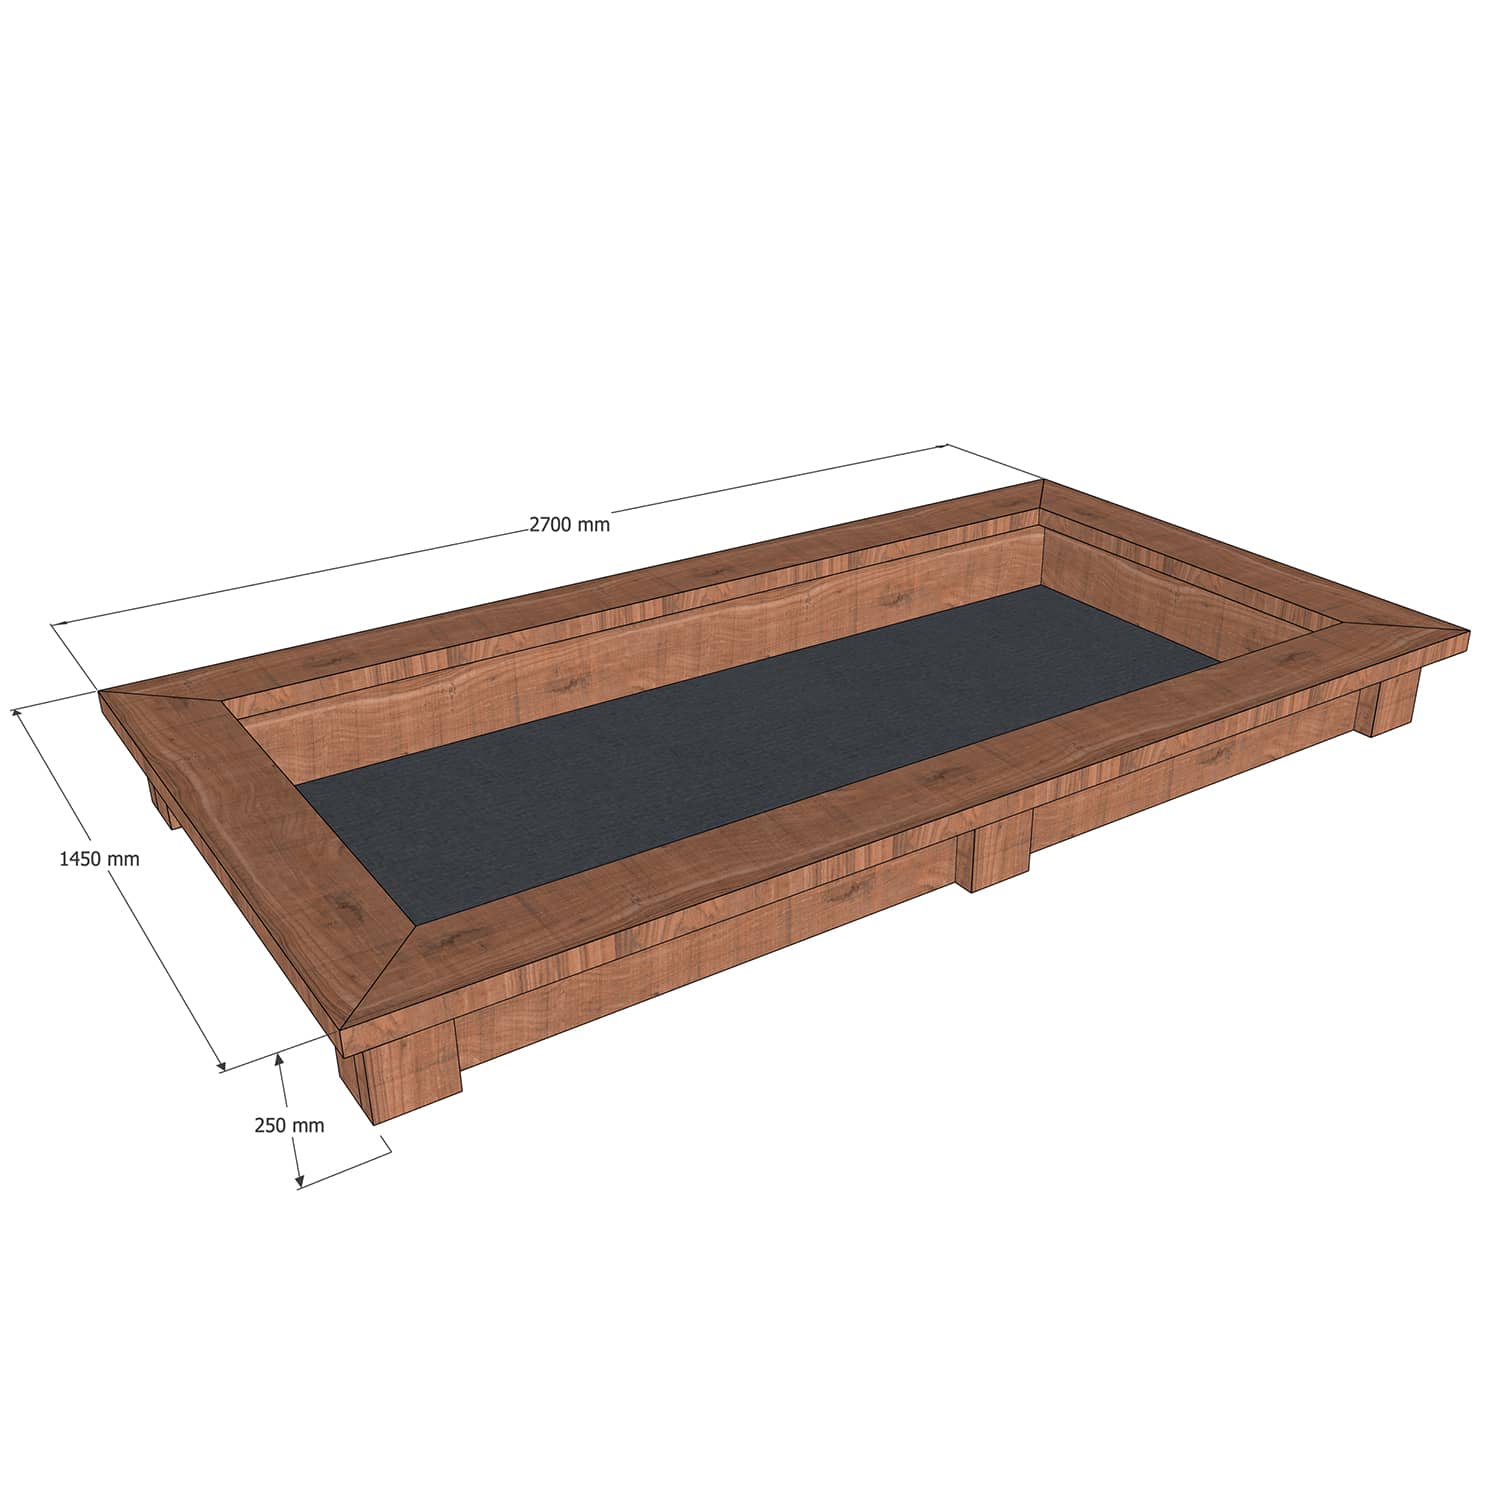 Wooden Raised Garden Bed Kit - 1450 x 2700 mm - 250 mm high